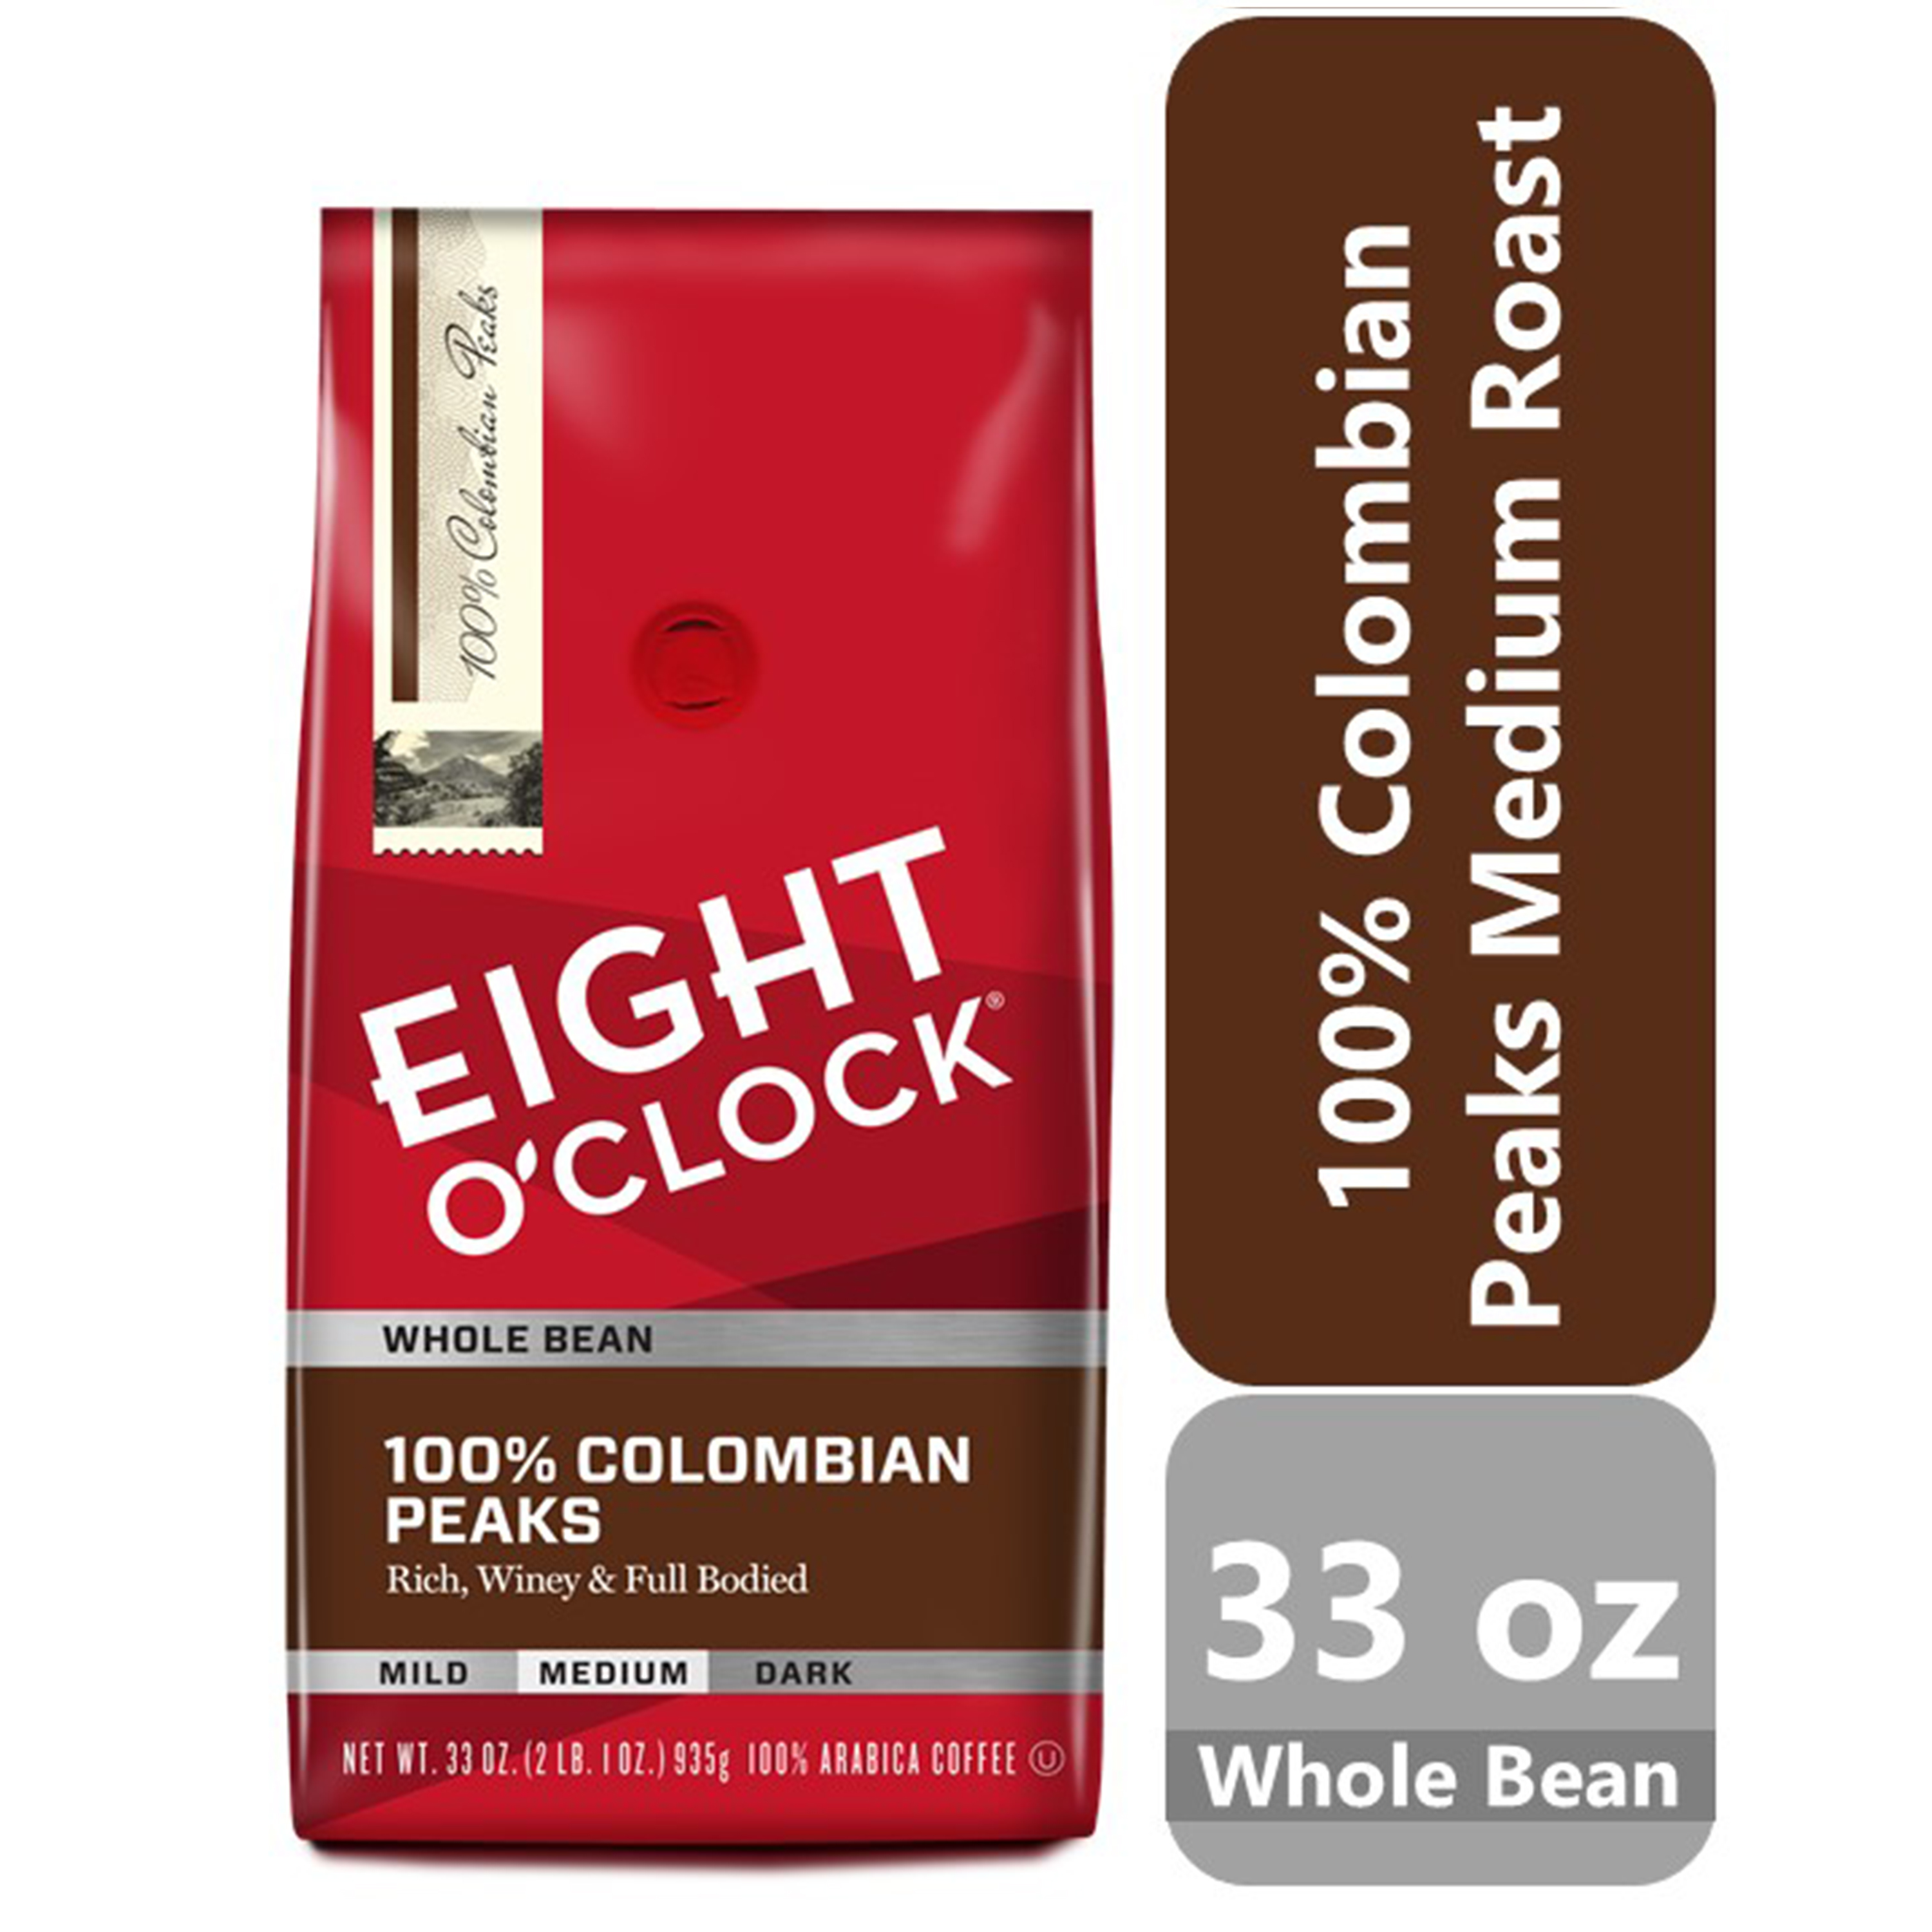 Eight O'Clock, 100% Colombian Peaks Coffee, Medium Roast, Whole Bean Coffee, 33 oz Bag - image 3 of 11